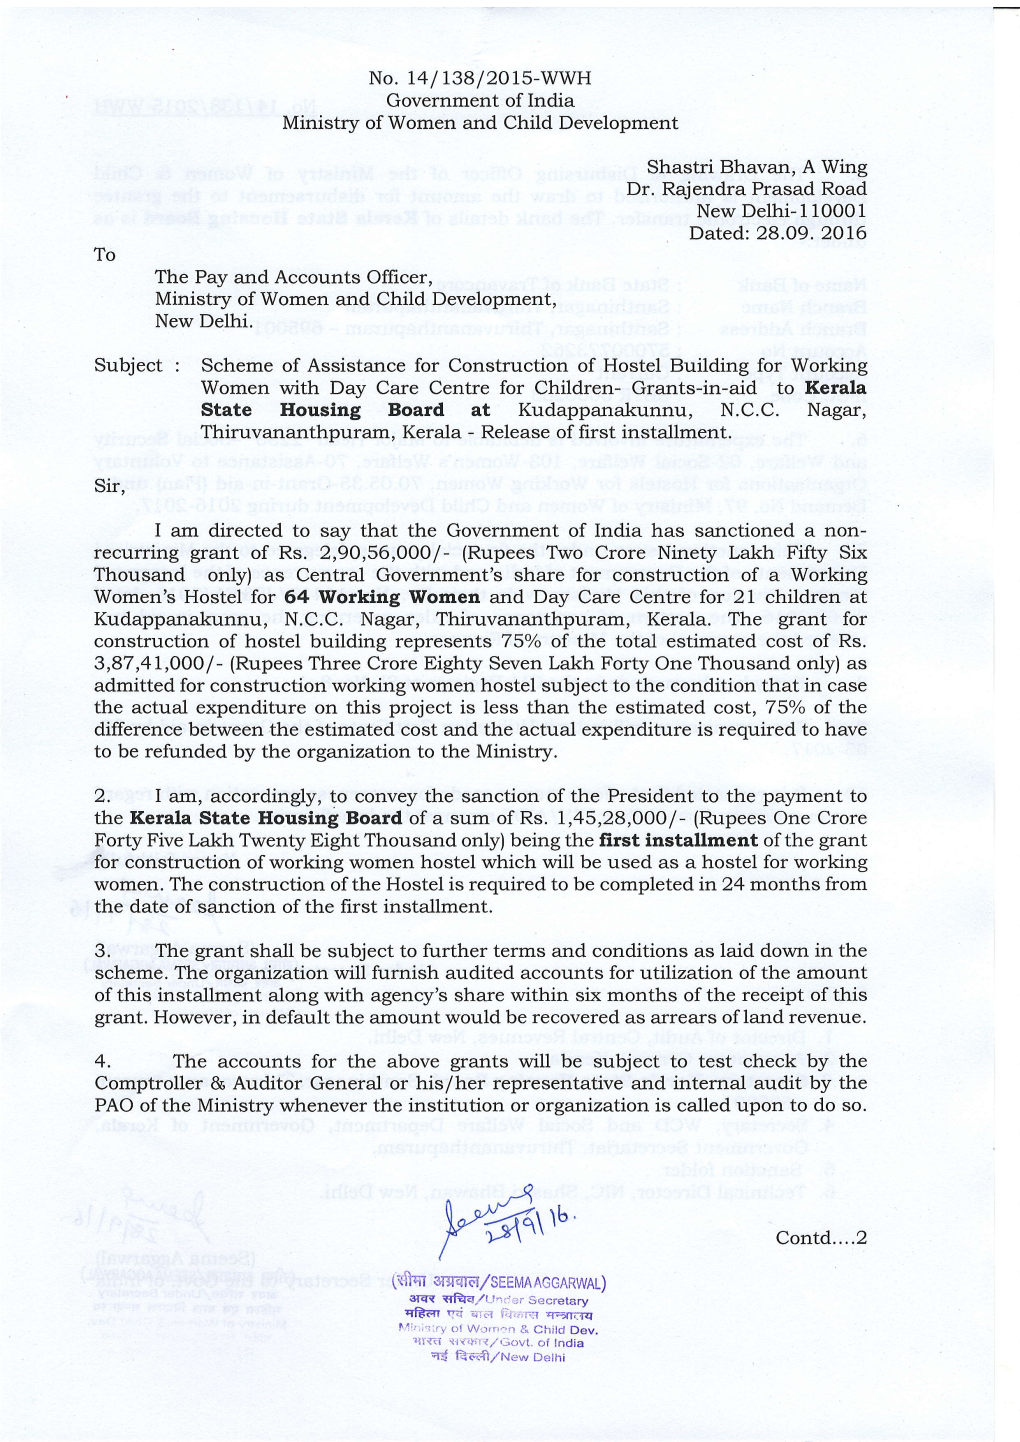 State Housing Board at Kudappanakunnu, N.C.C. Nagar, Thiruvananthpuram, Kerala - Release of First Installment